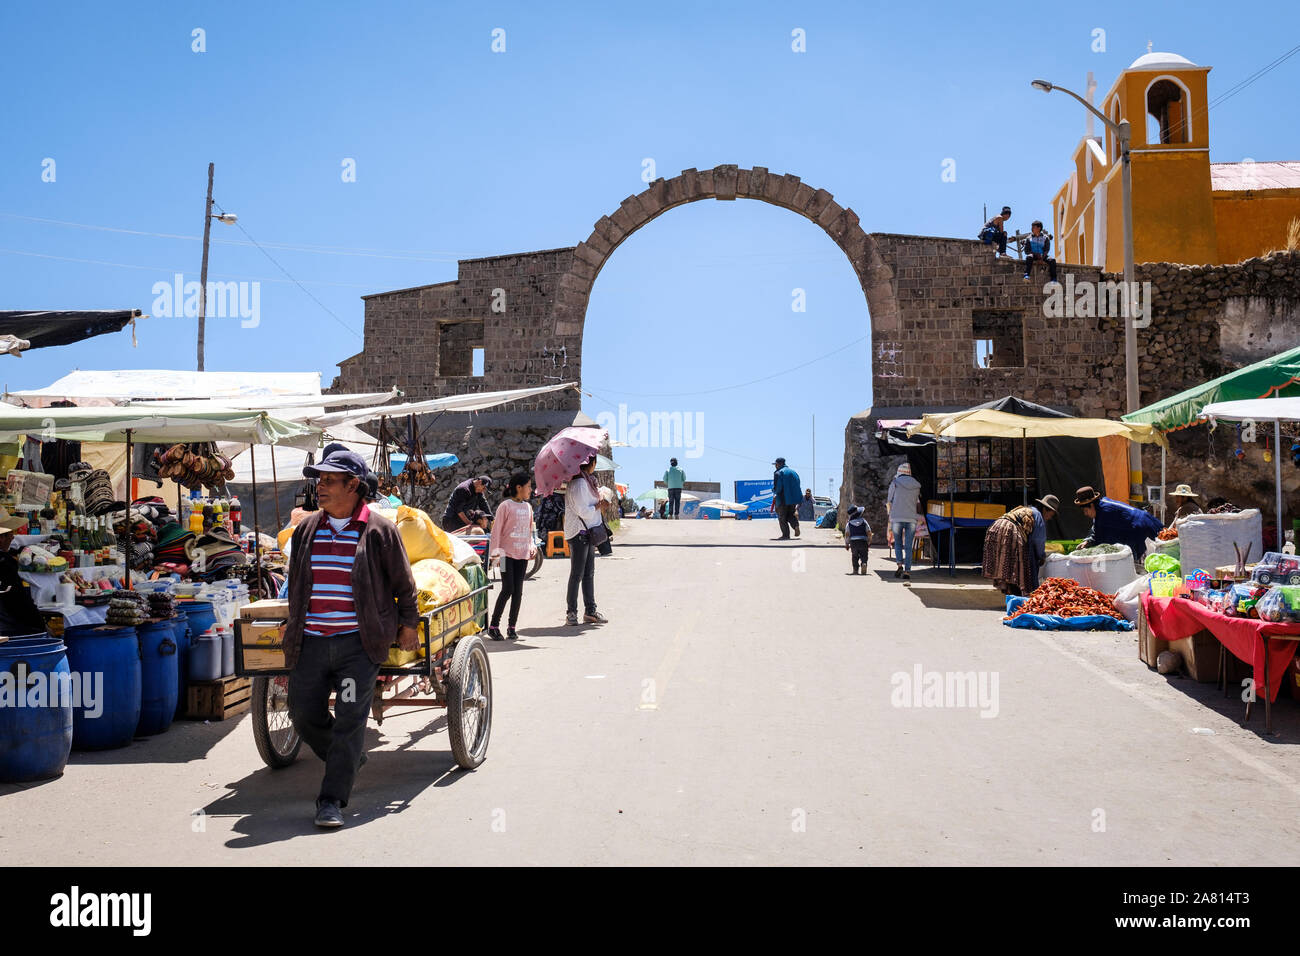 People walking on street market in the Peru side of the Peru-Bolivia border near Puno Stock Photo